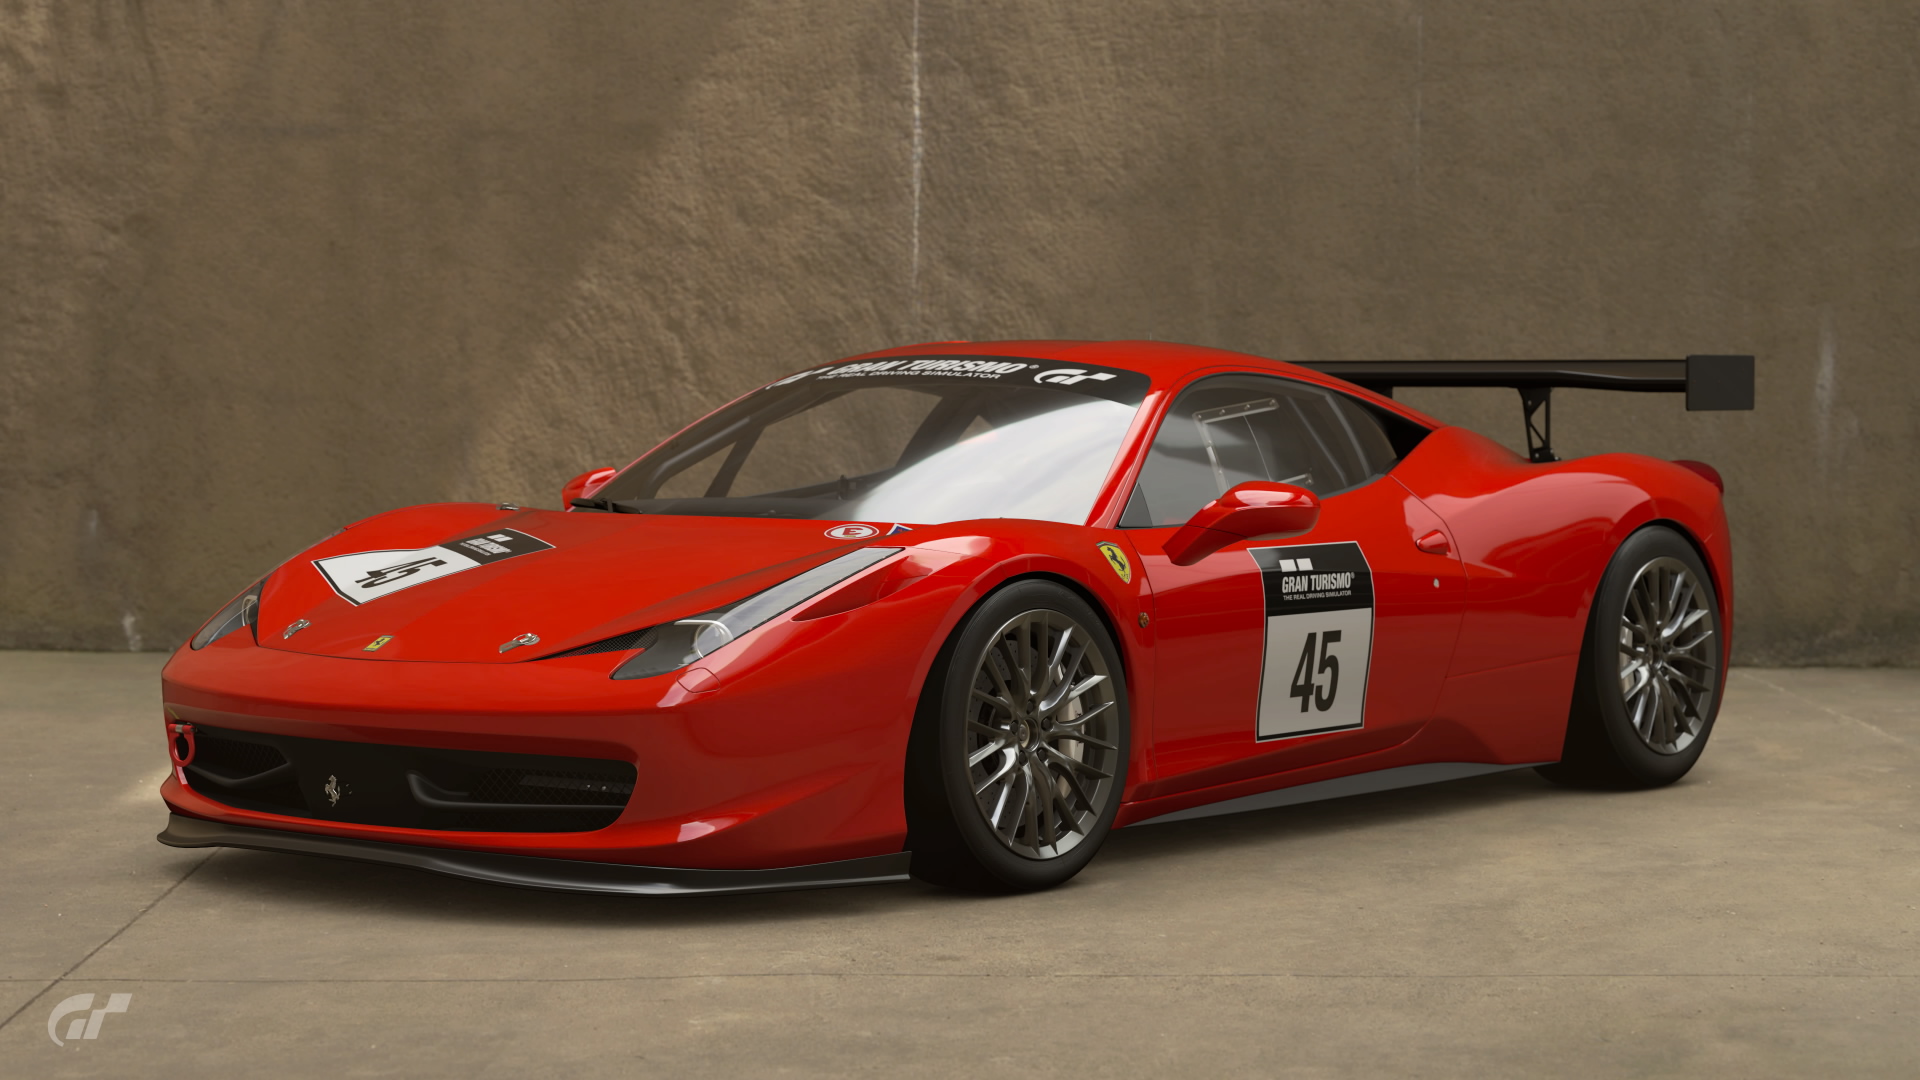 Image - Ferrari 458 Italia Gr.4.jpg | Gran Turismo Wiki | FANDOM powered by Wikia